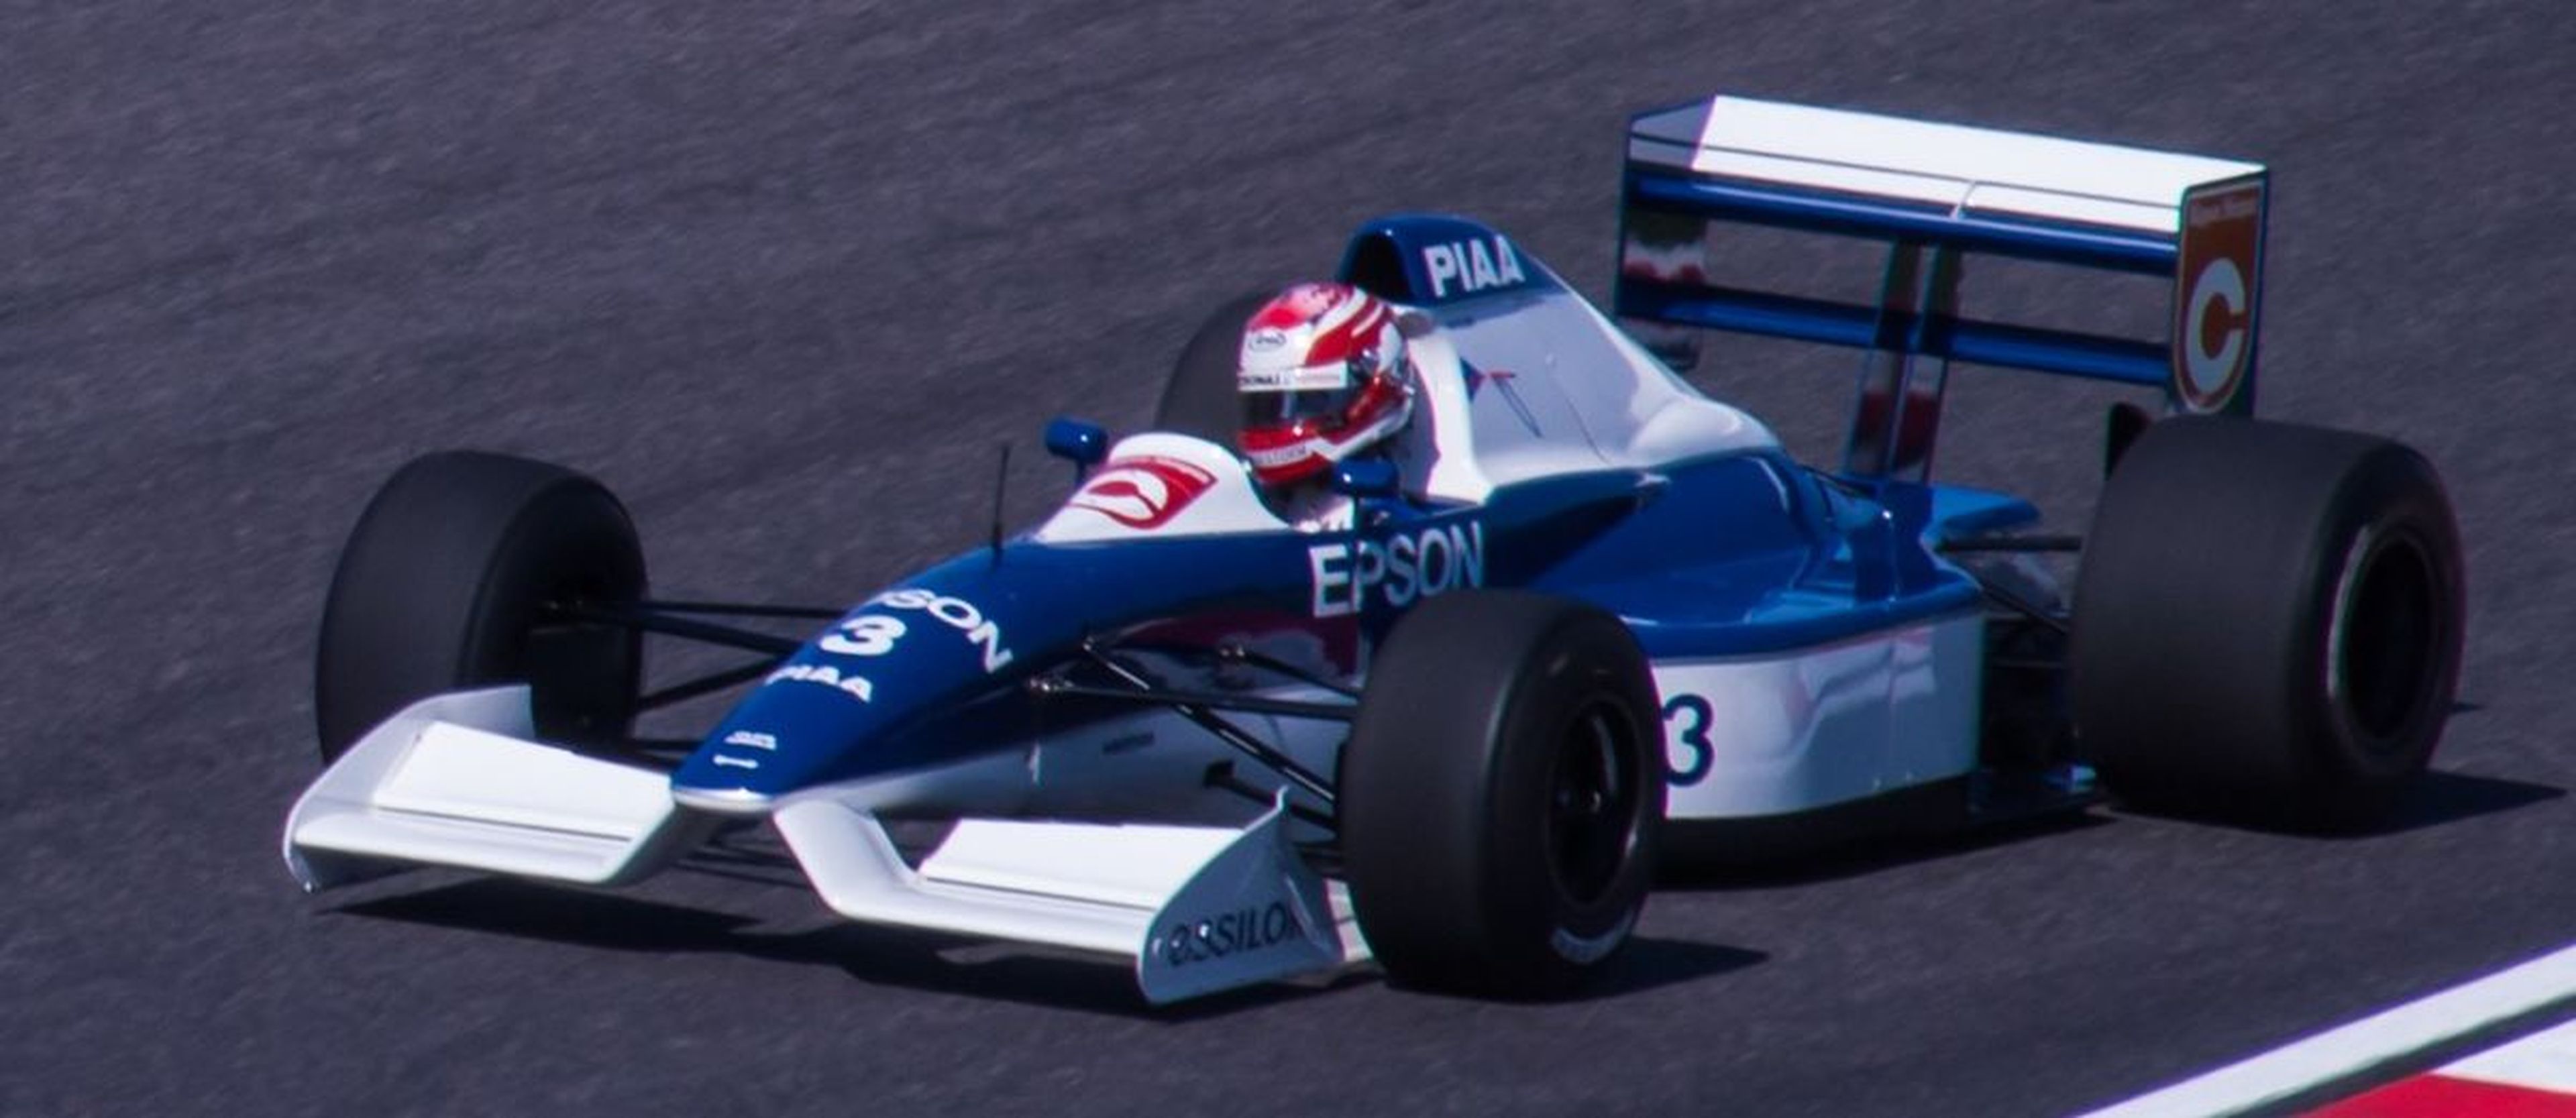 Tyrrell 019, ¡qué morro!